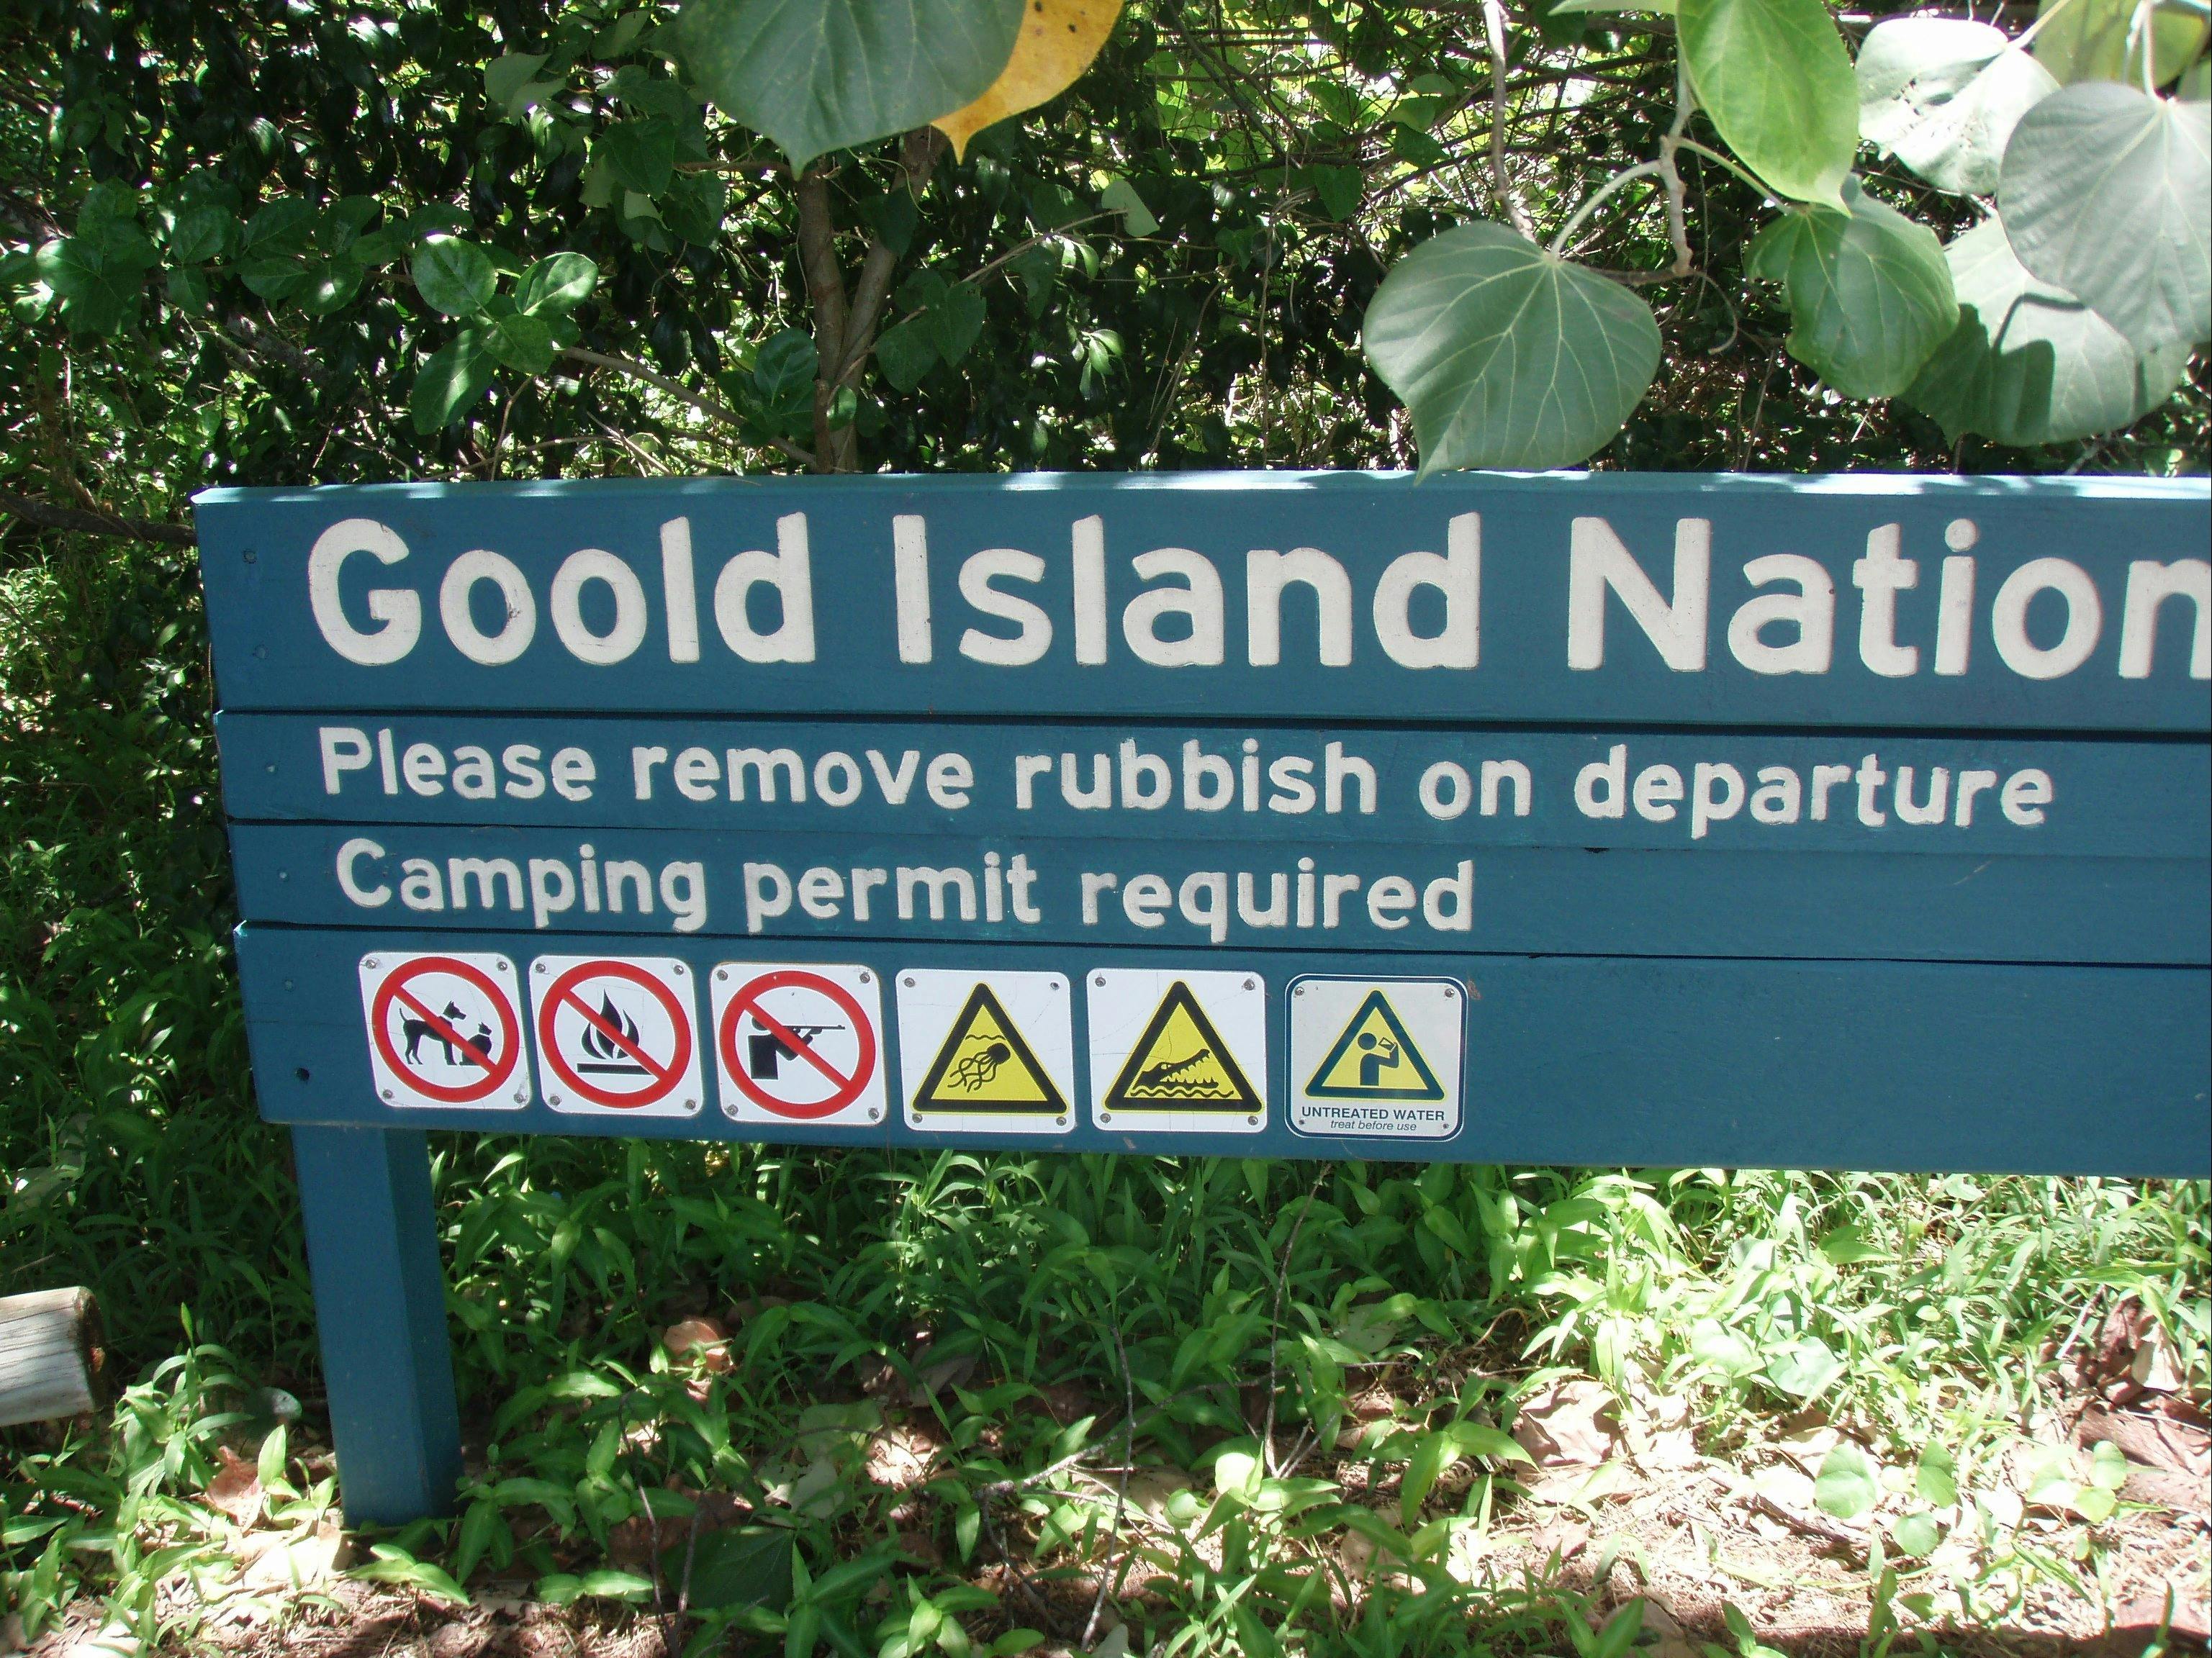 Goold Island National Park